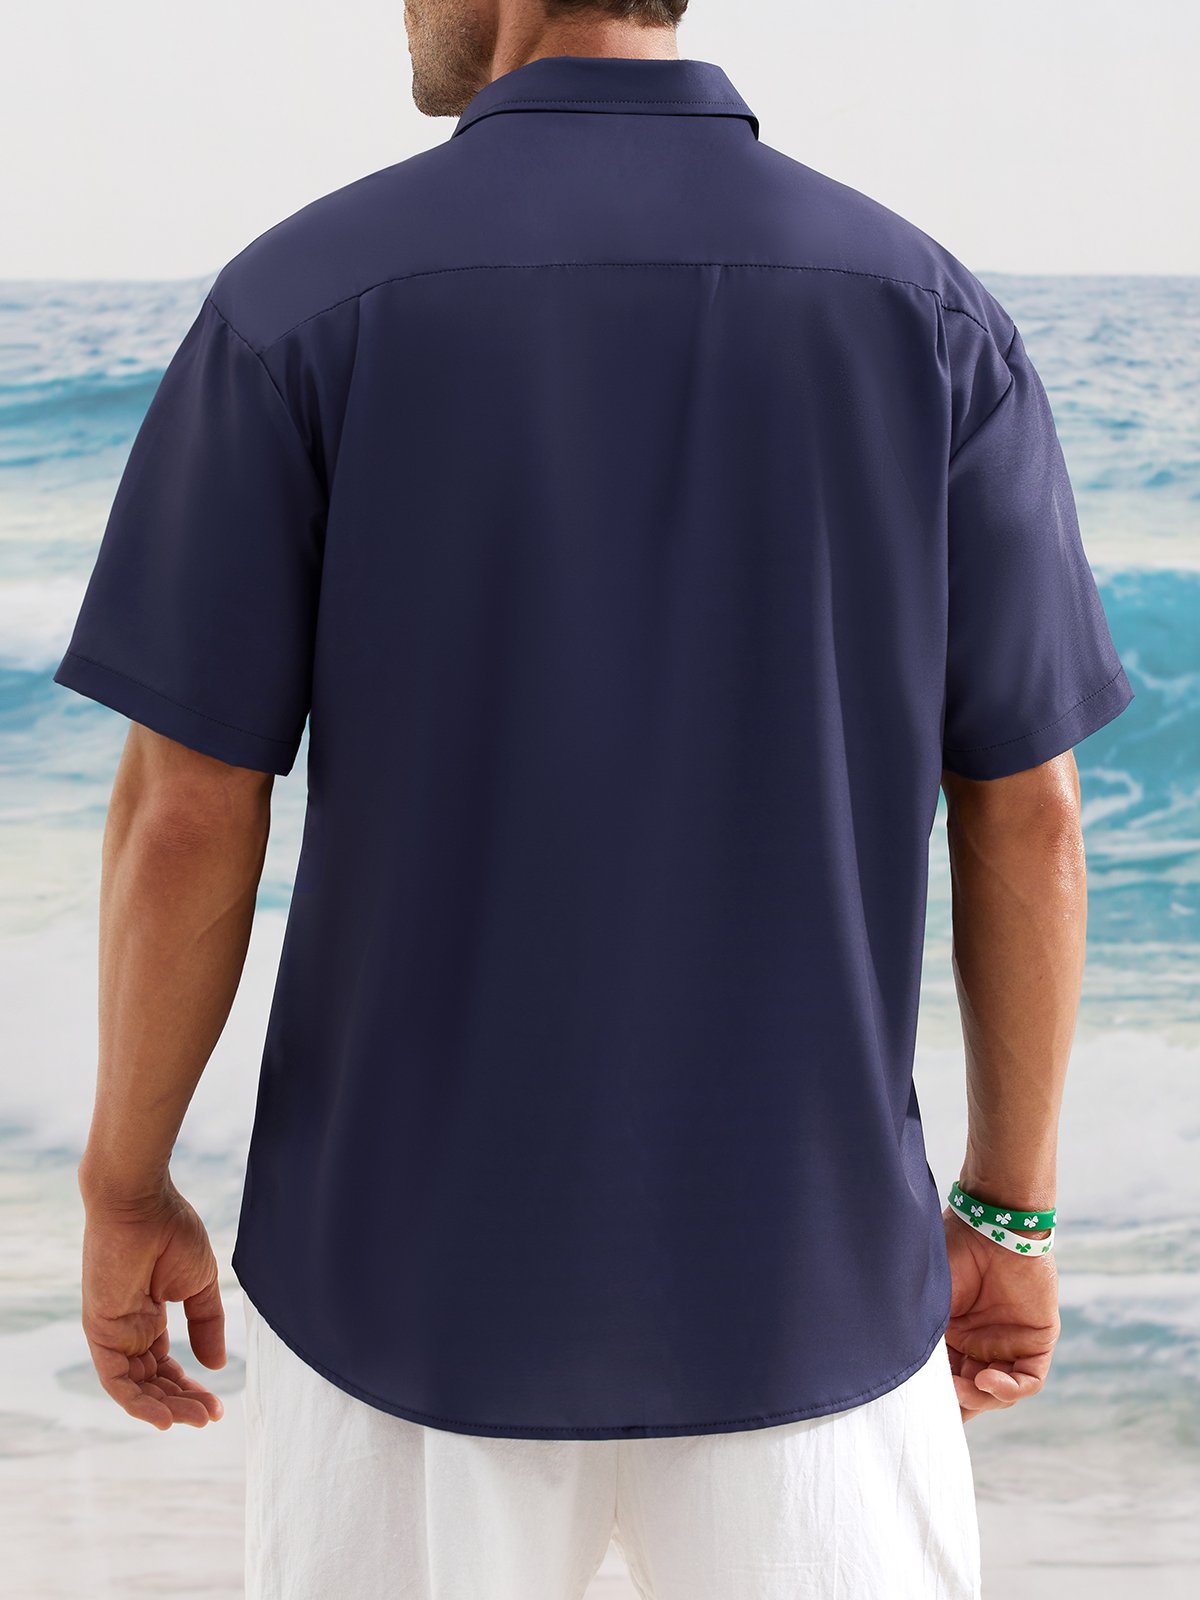 Hardaddy Hawaiian Button Up Shirt for Men Blue St. Patrick's Day Lucky Clover Regular Fit Short Sleeve Bowling Shirt St Paddy's Day Shirt